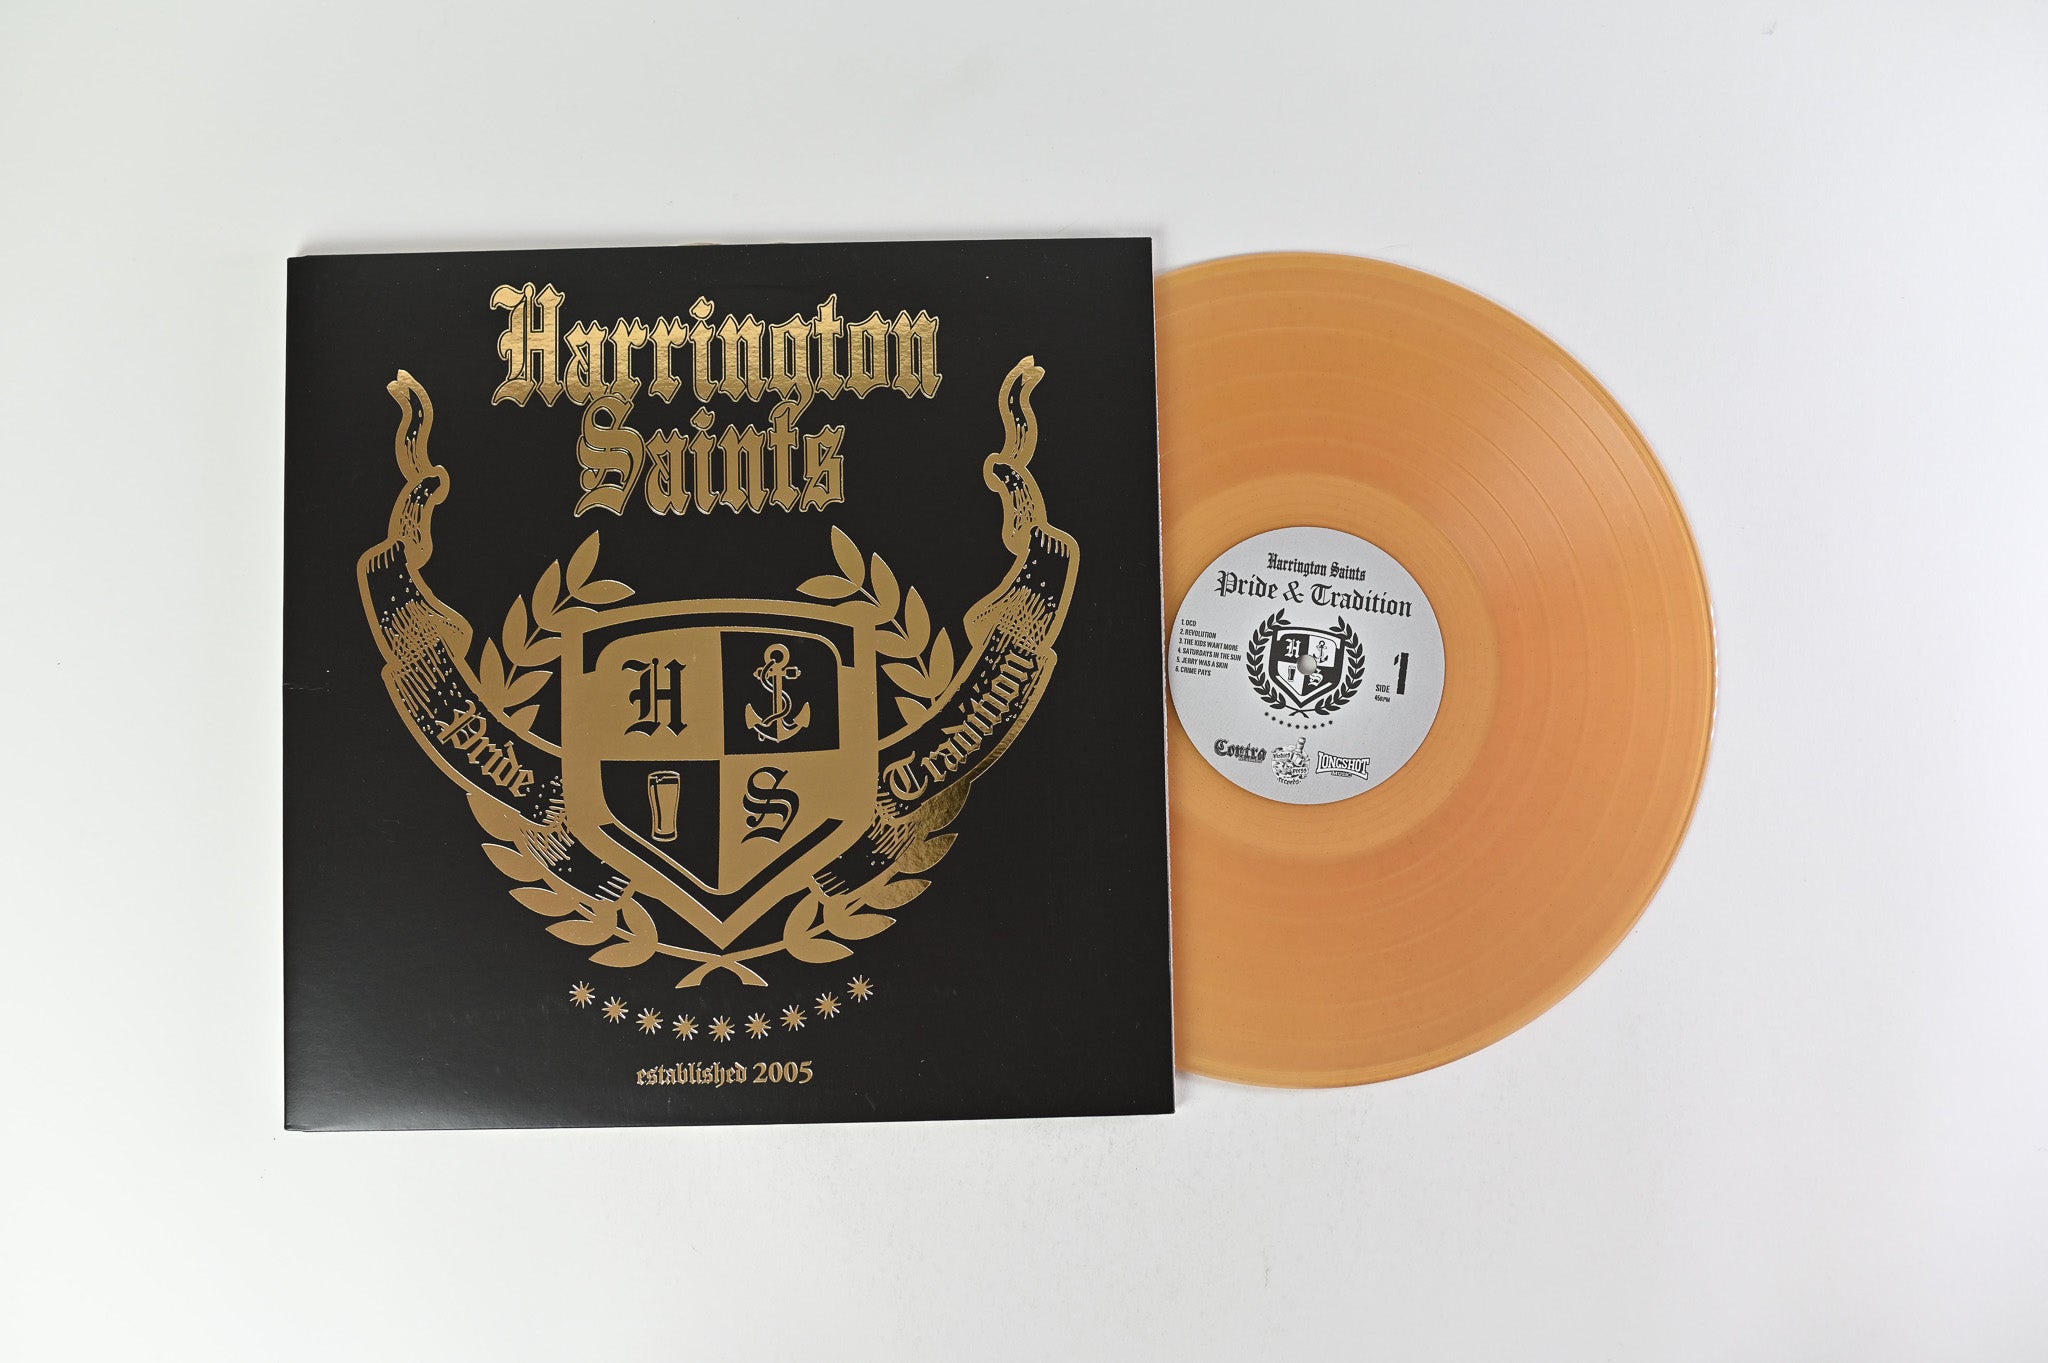 Harrington Saints - Pride & Tradition on Pirates Press Records - Beer Yellow Vinyl